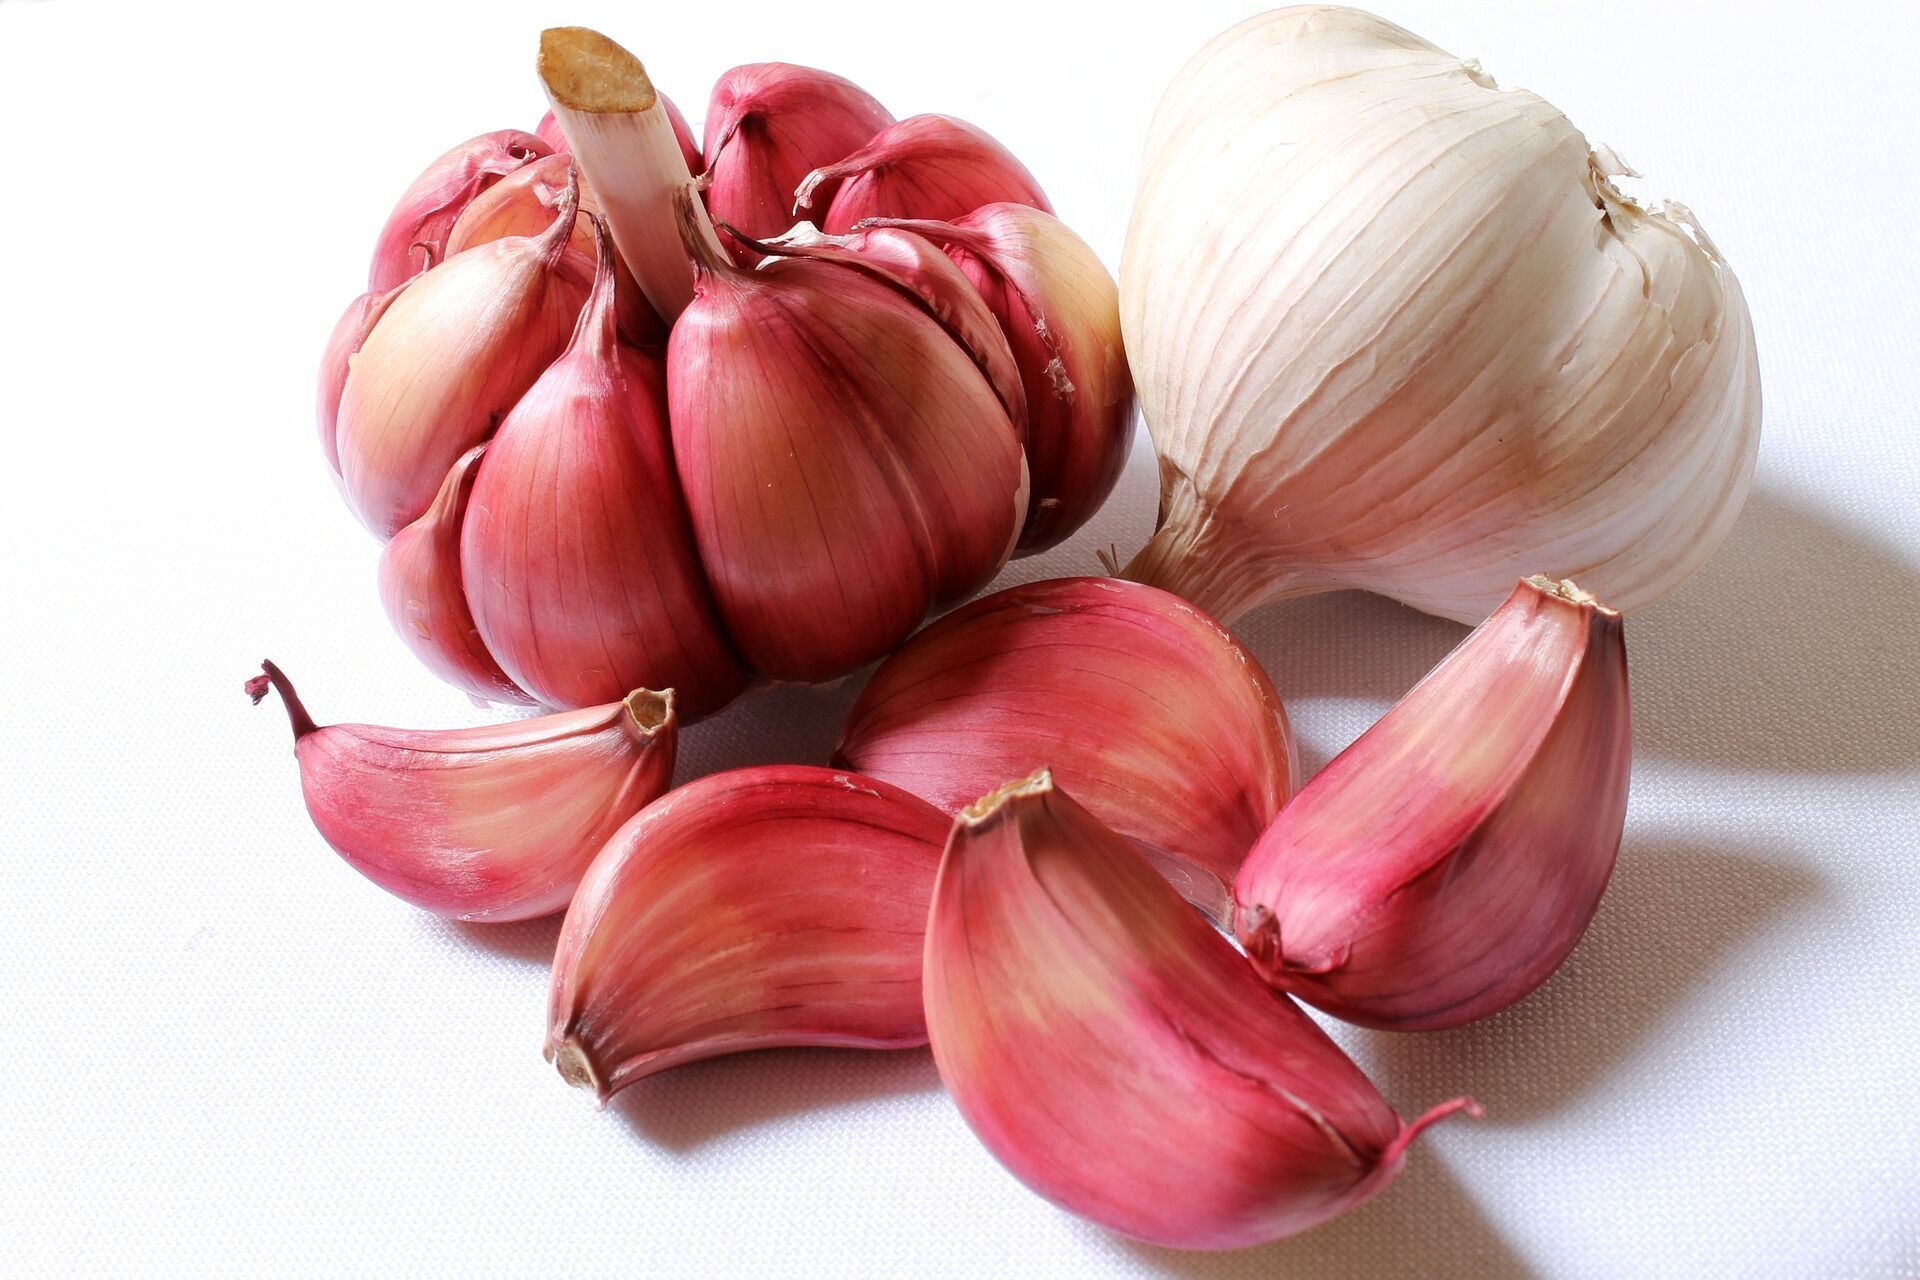 Raw garlic